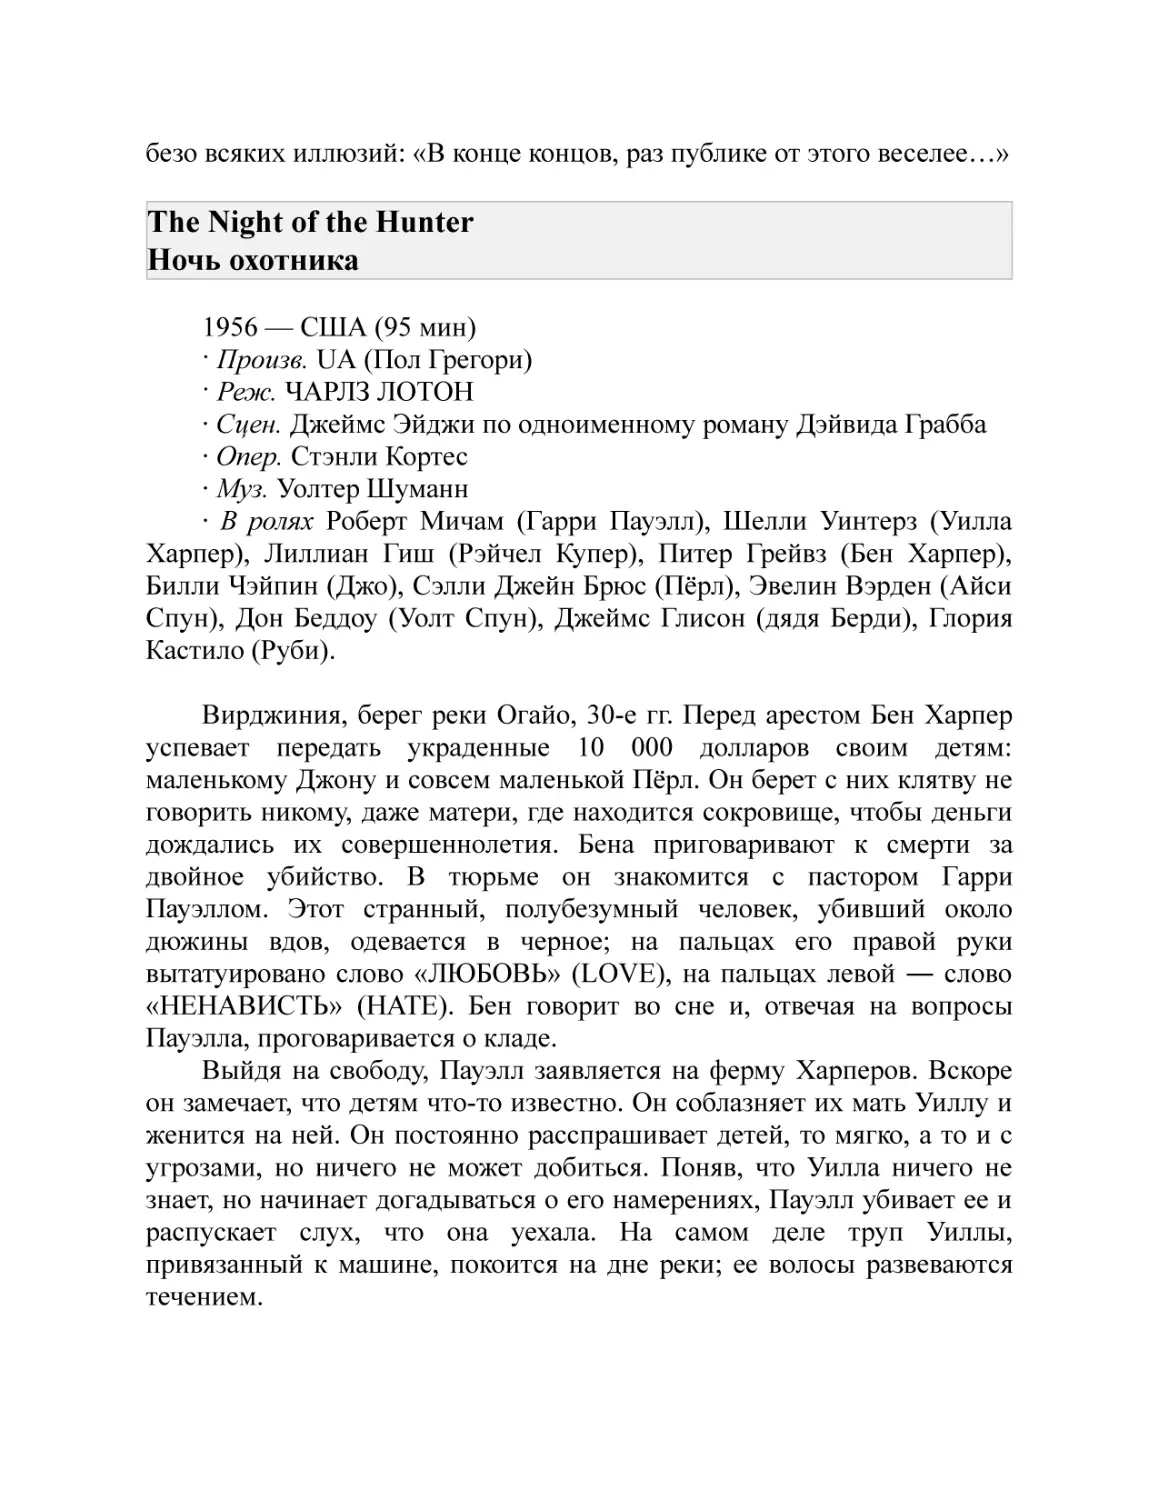 The Night of the Hunter Ночь охотника